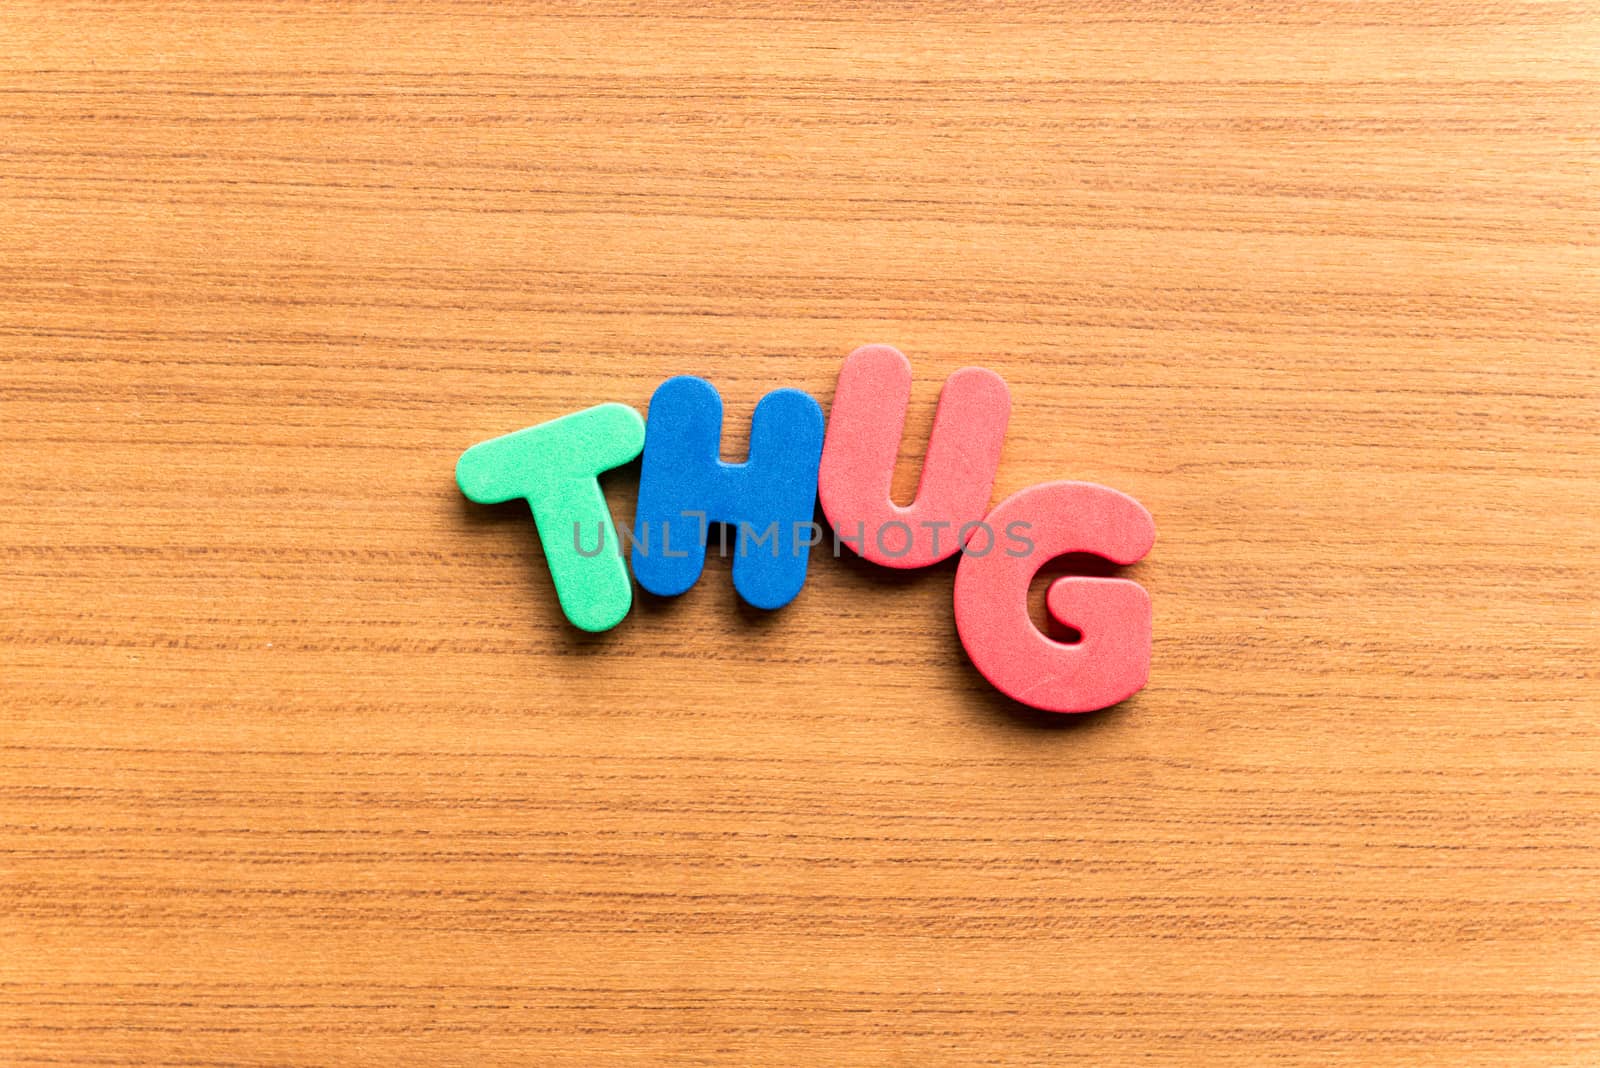 thug colorful word by sohel.parvez@hotmail.com